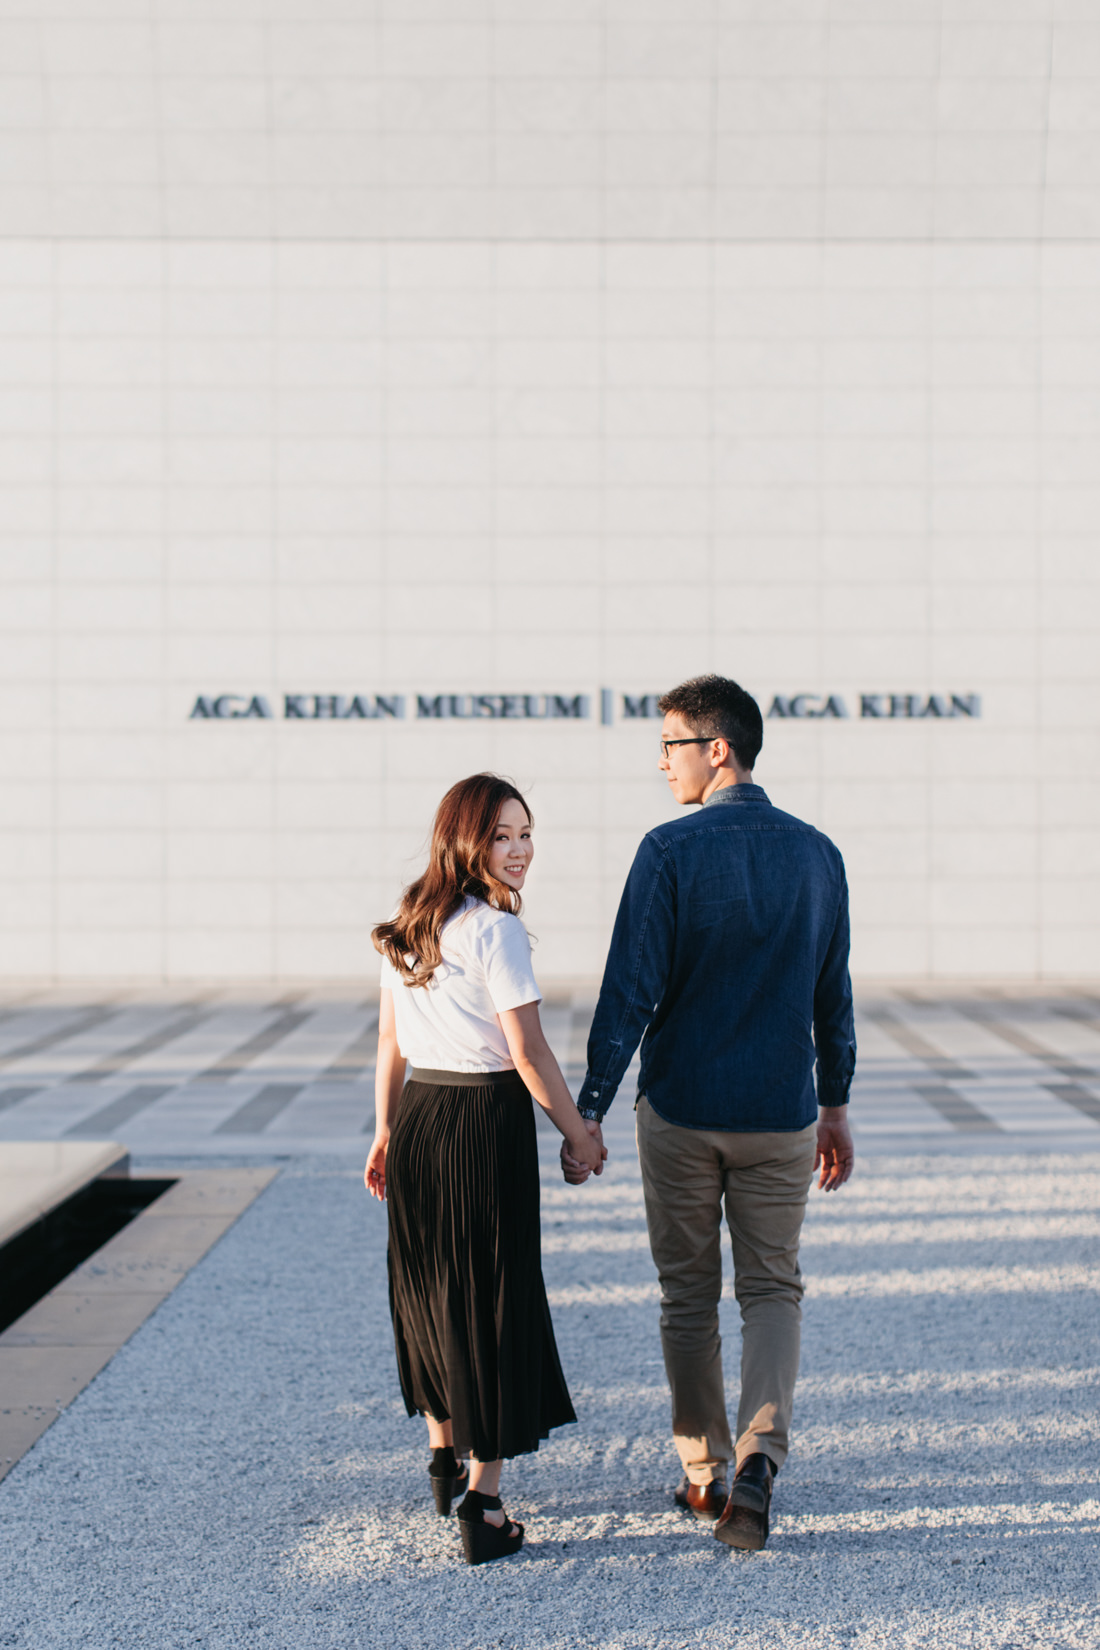 Aga Khan Museum engagement | Minimalist portrait location | Toronto Wedding Photographer | EightyFifth Street Photography